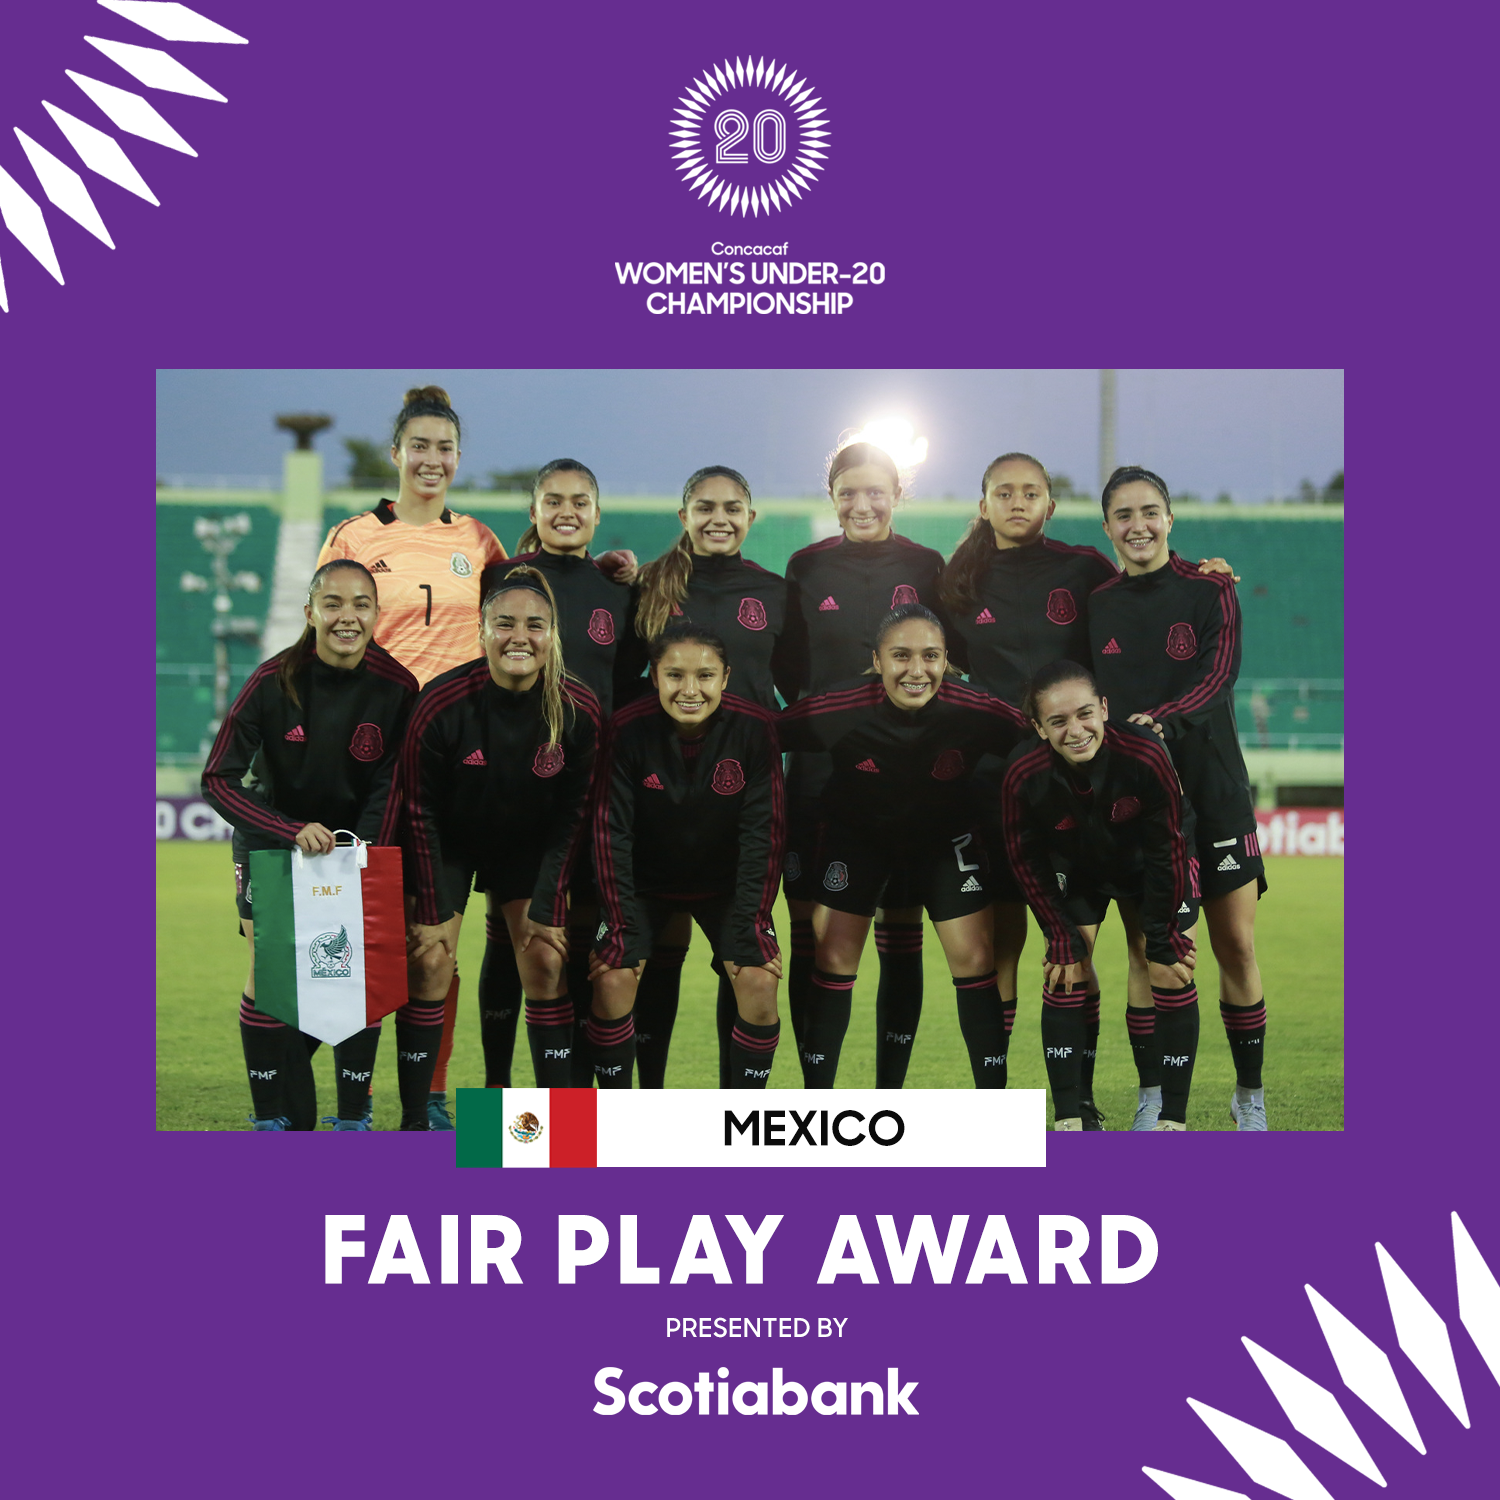 Mexico, Fair Play Award presented by Scotiabank